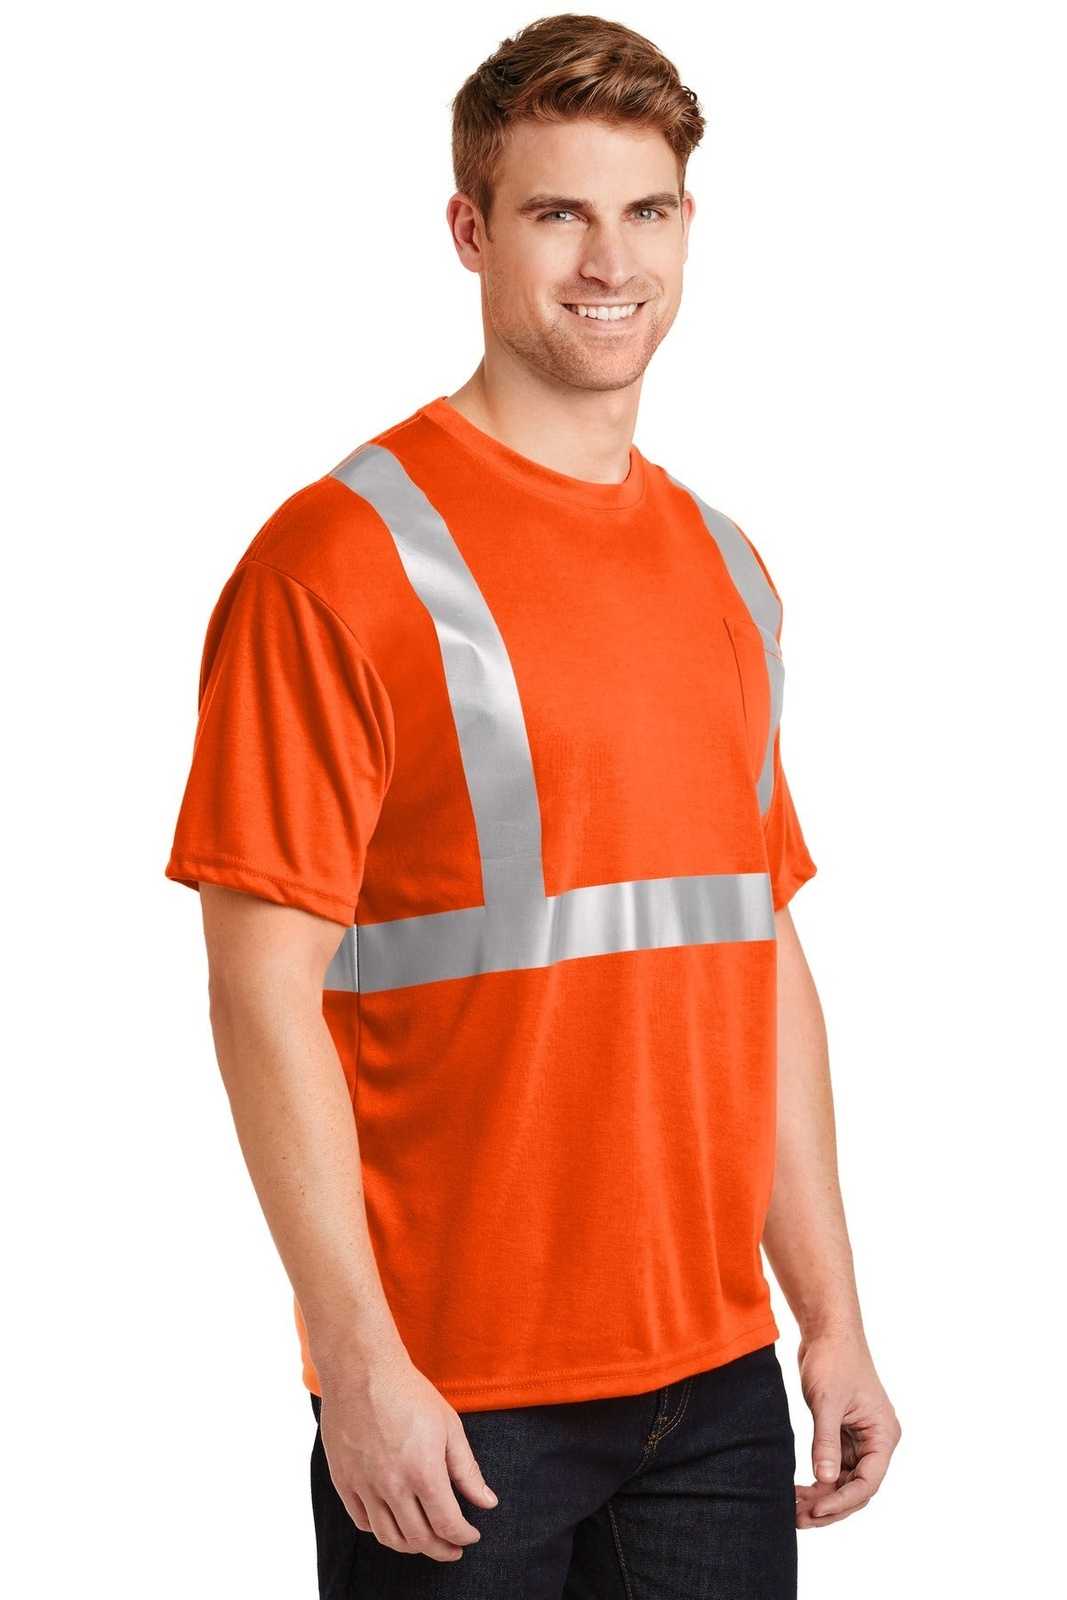 CornerStone CS401 ANSI 107 Class 2 Safety T-Shirt - Safety Orange Reflective - HIT a Double - 4